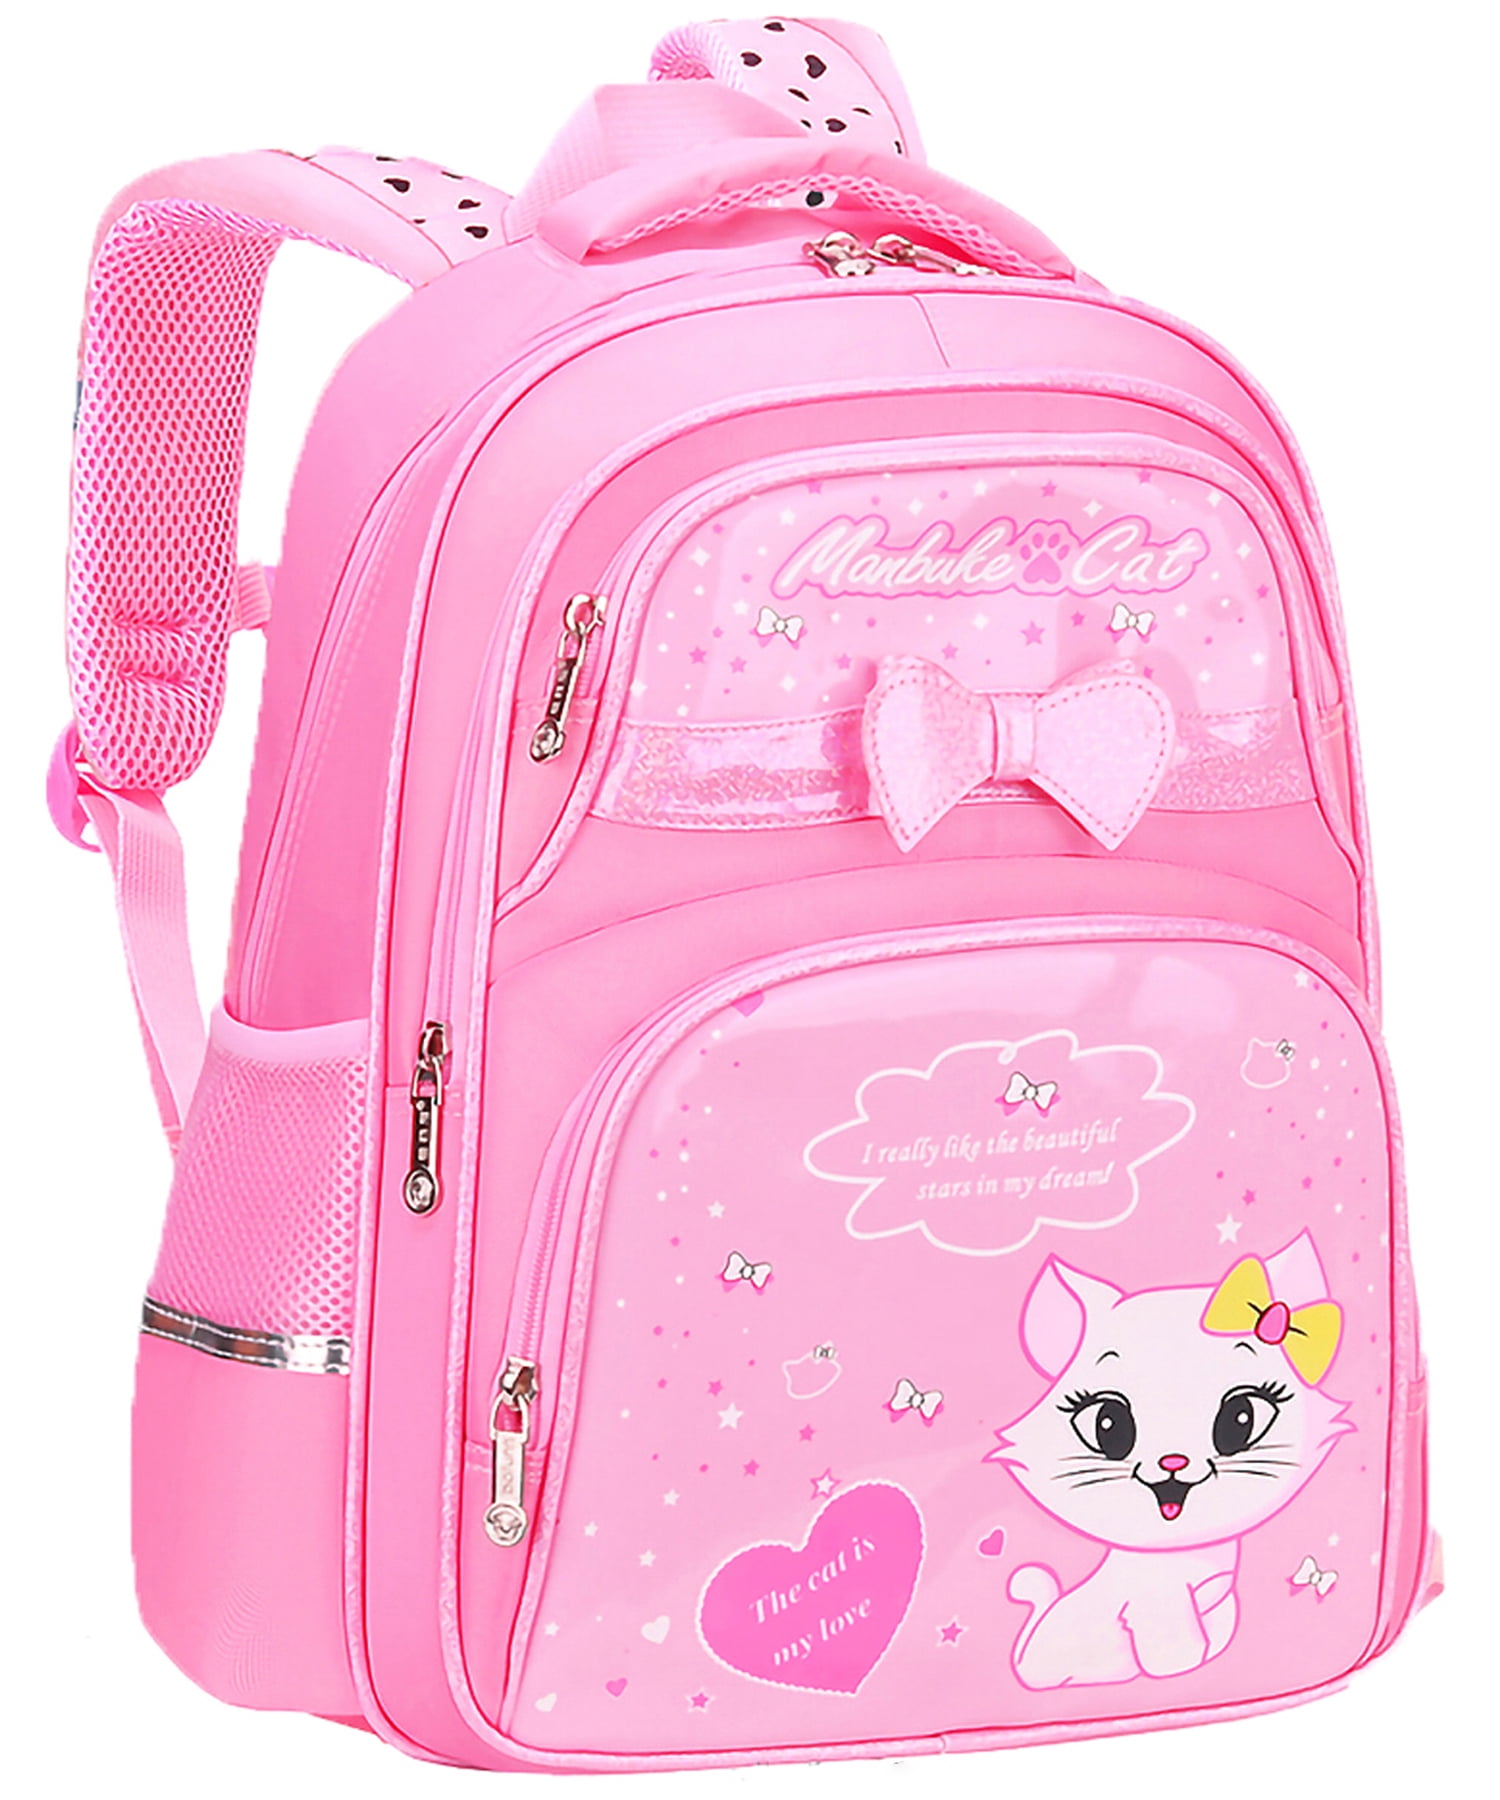 Rainbow Pink Backpack Girls School Bag Rucksack Travel Pencil Case Smile DREAMS 